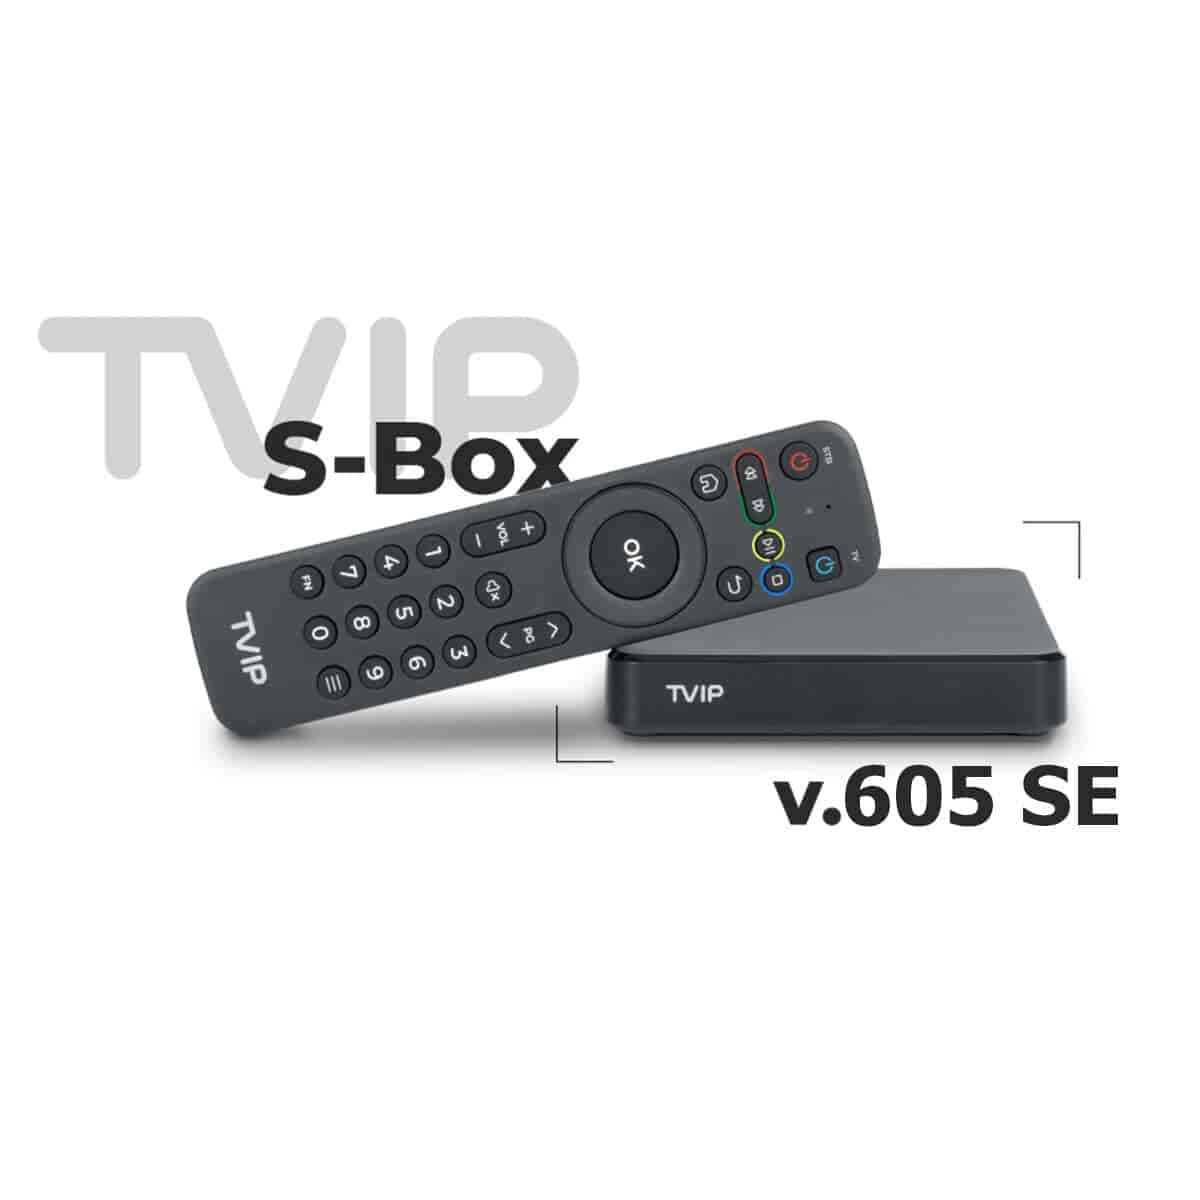 TVIP605SE IPTV boks